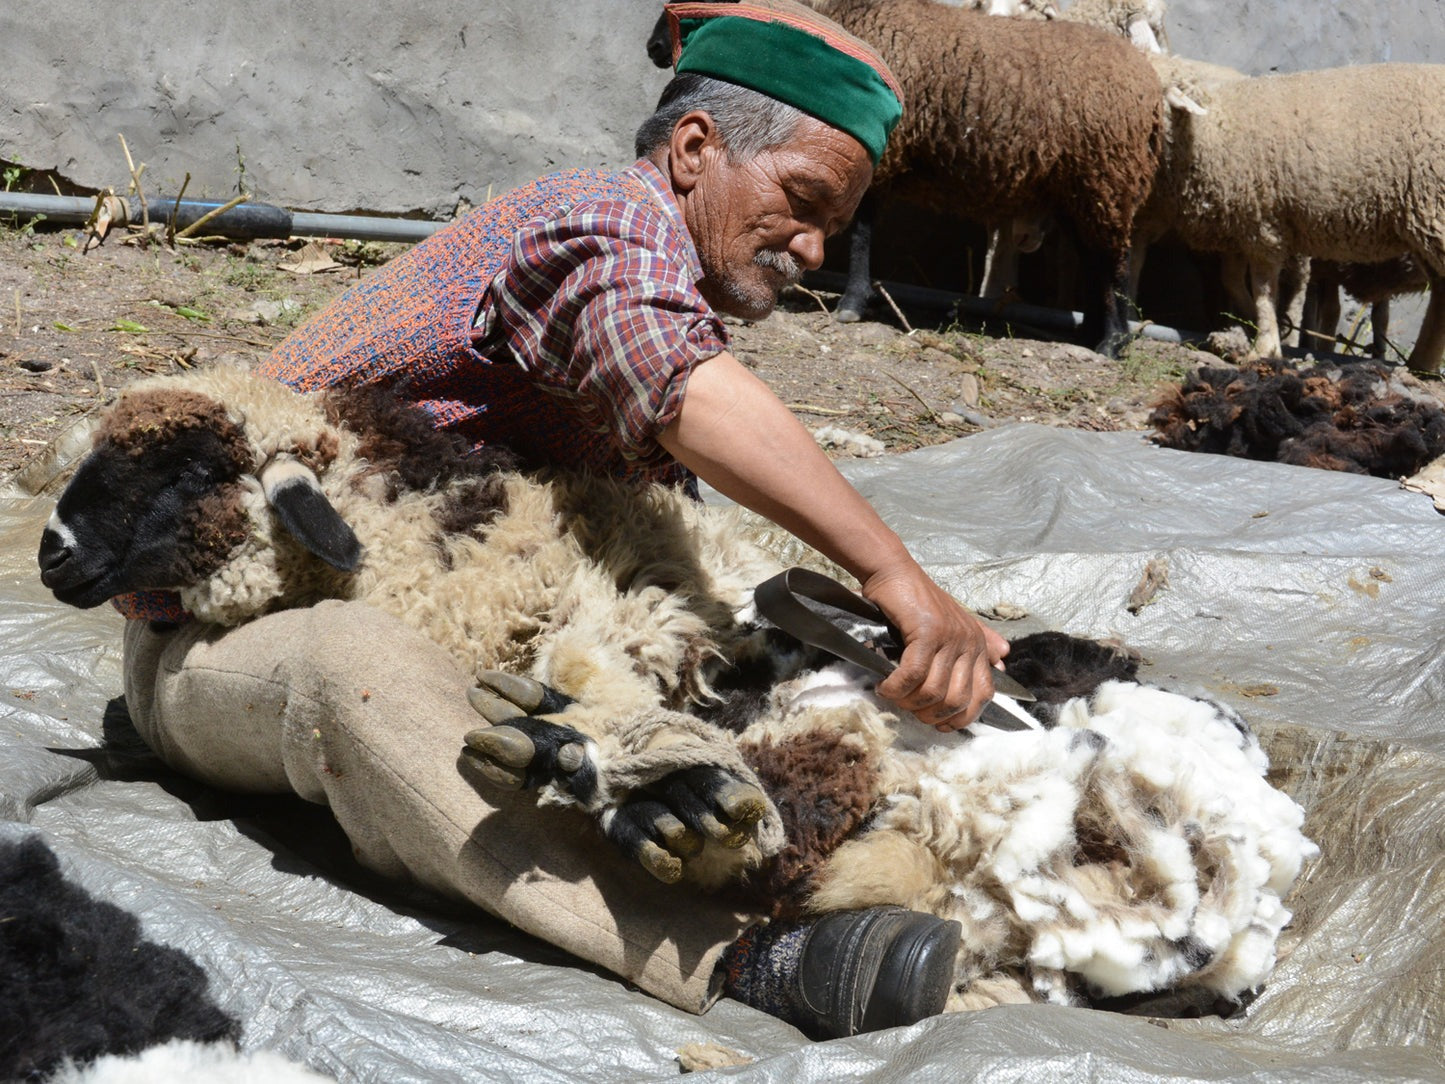 Sheep being shorn